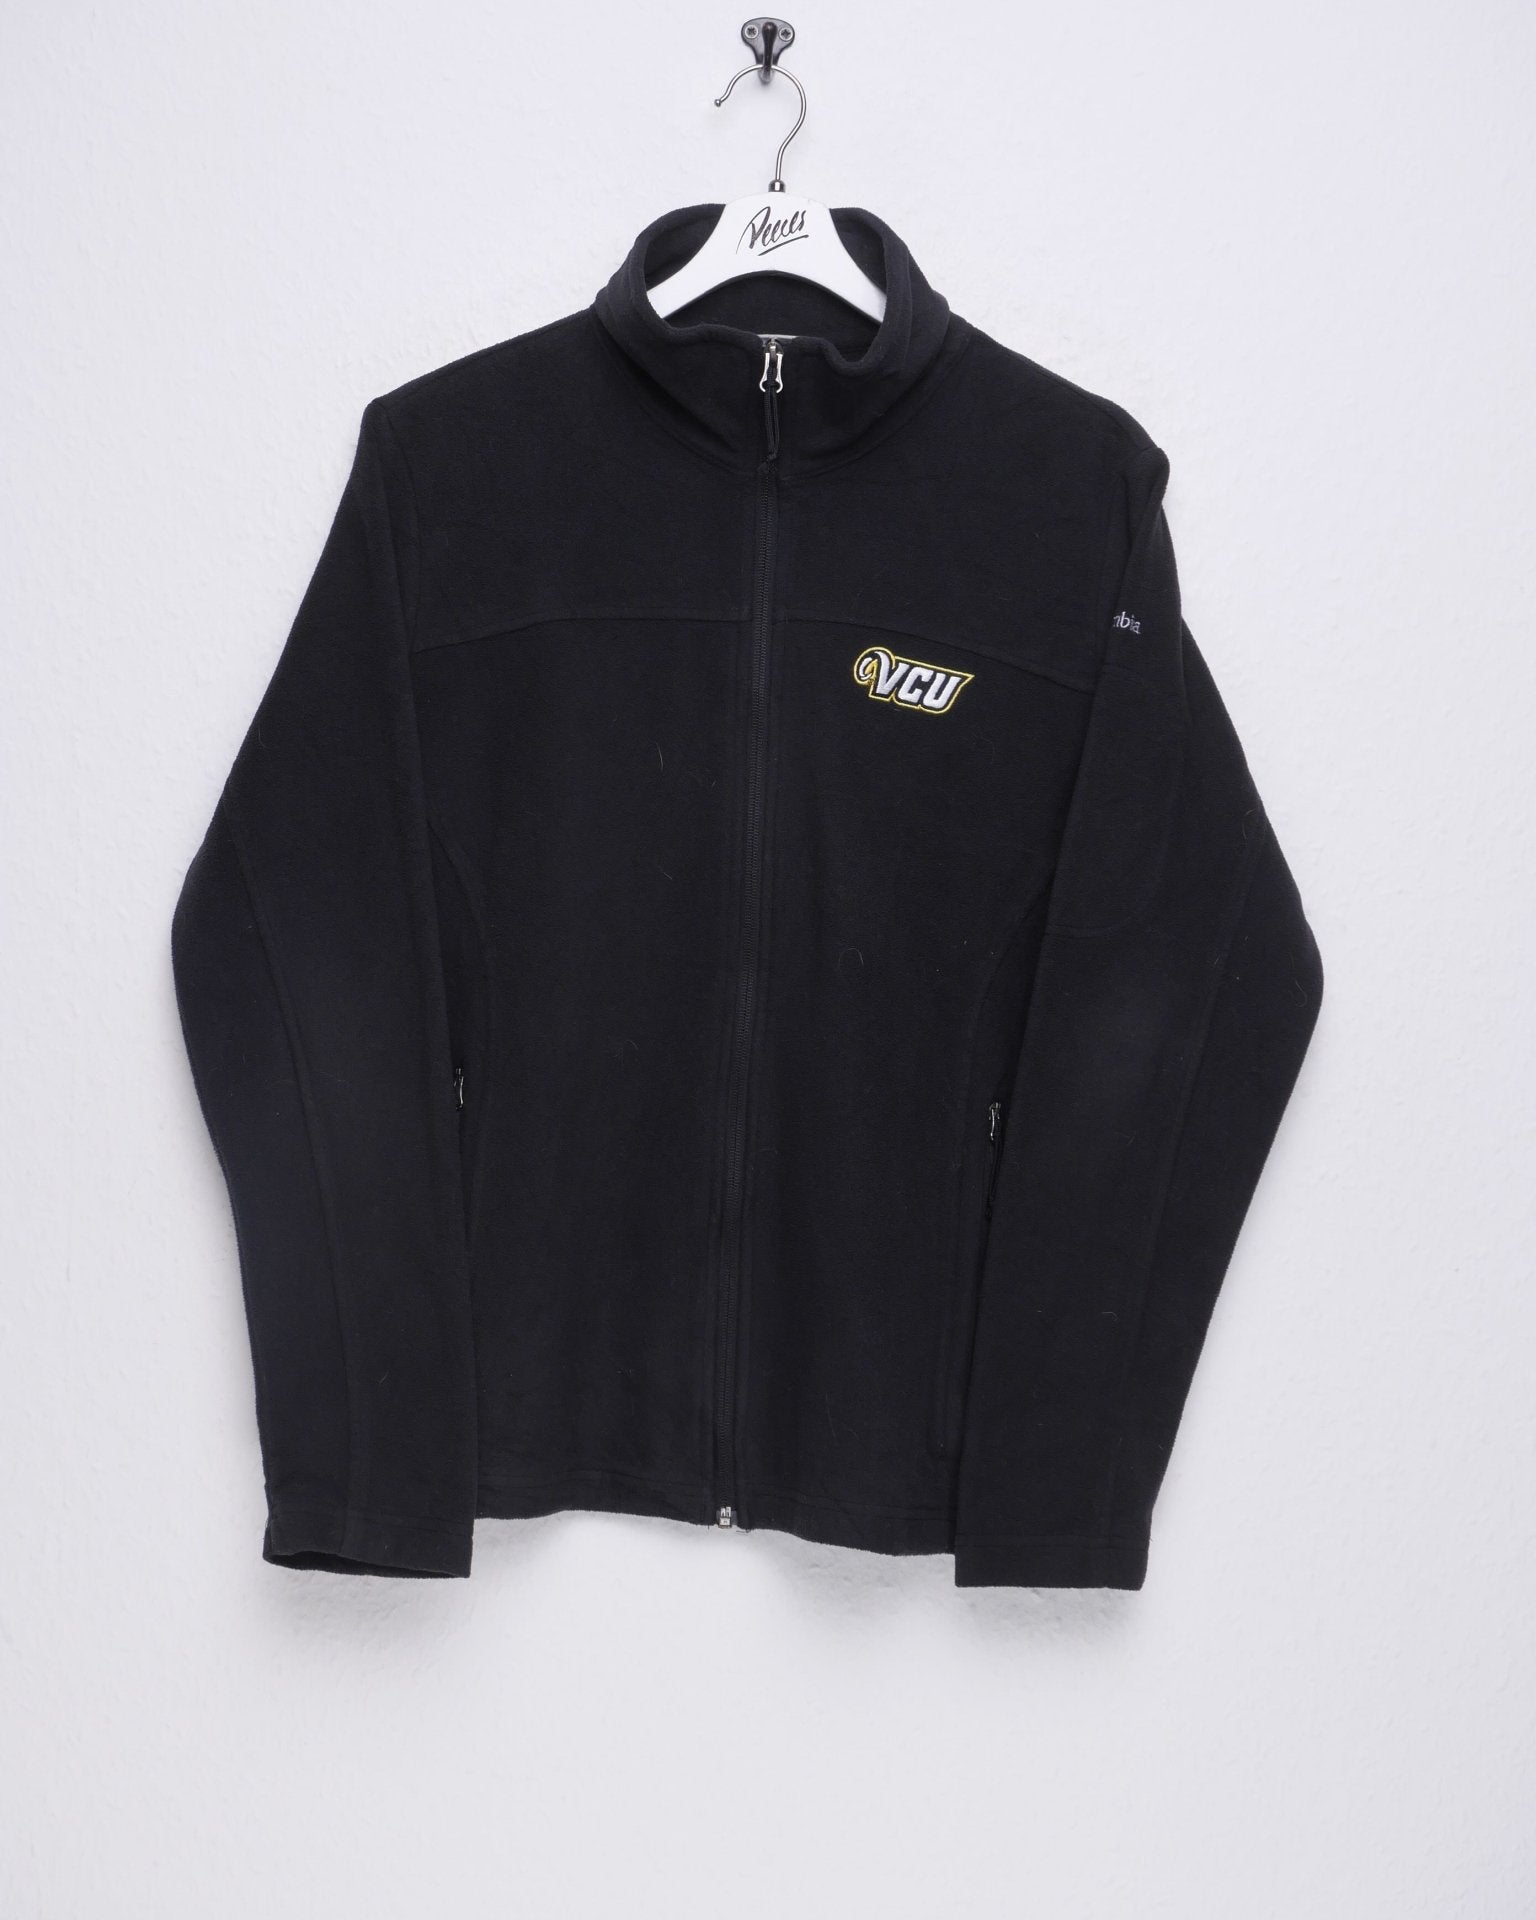 Columbia embroidered Logo 'VCU' black Full Zip Fleece Sweater - Peeces